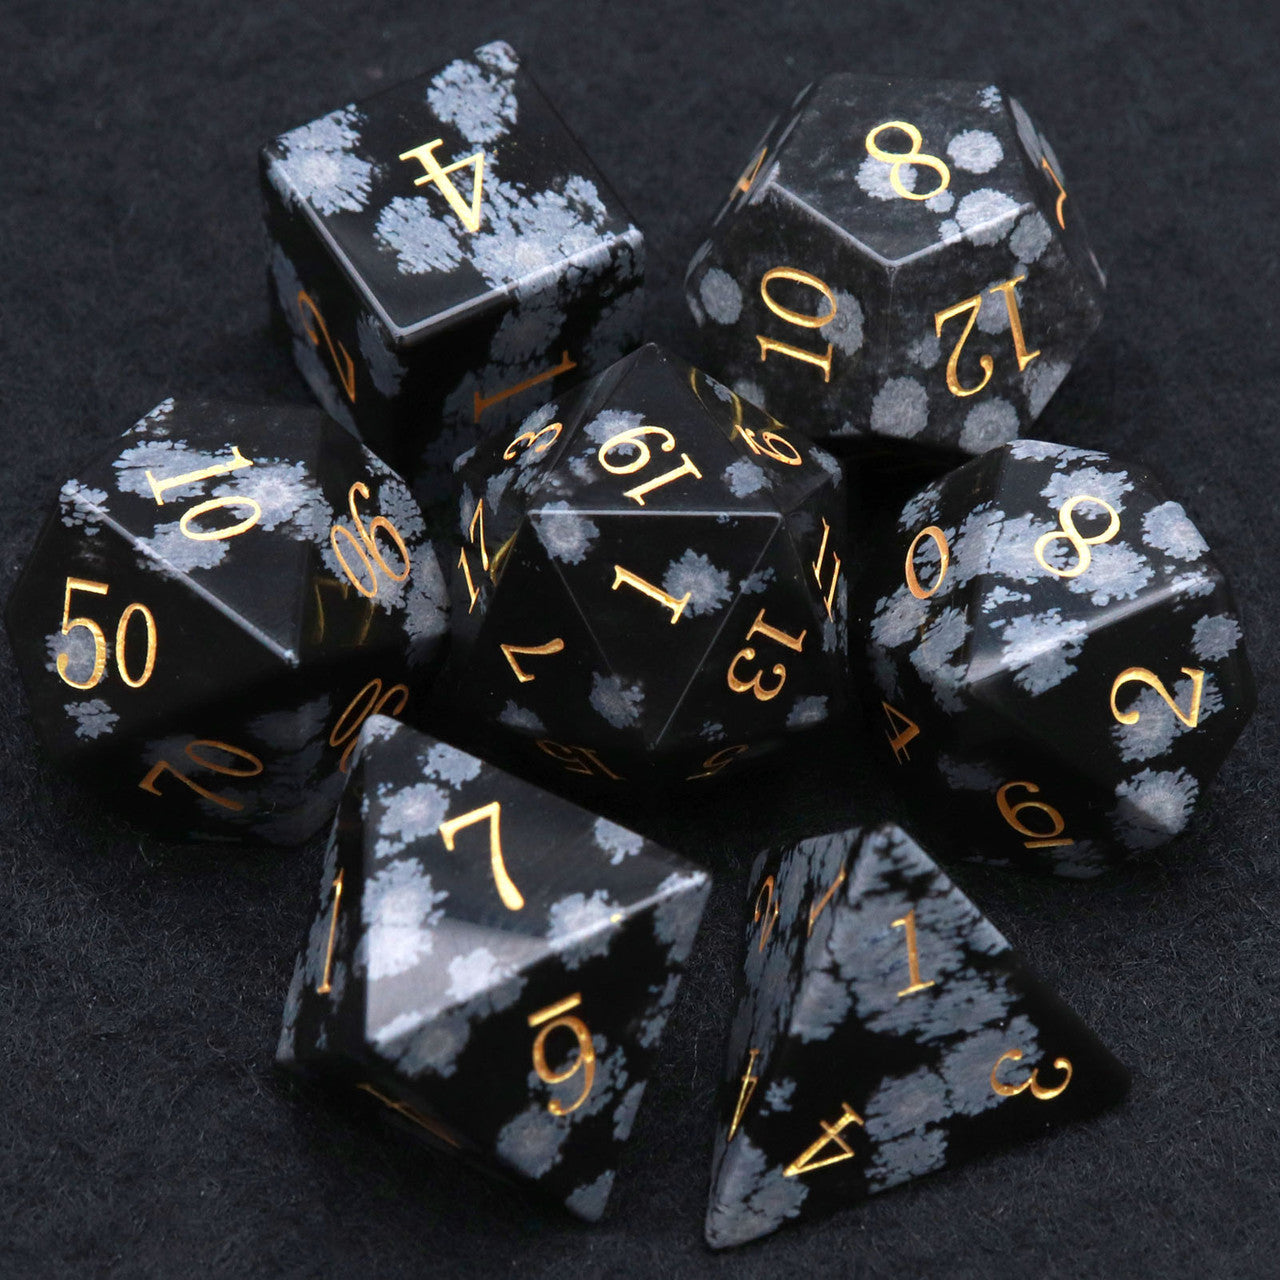 snowflake obsidian dice, gemstone dice, dnd dice, haxtec dice, natural stone dice